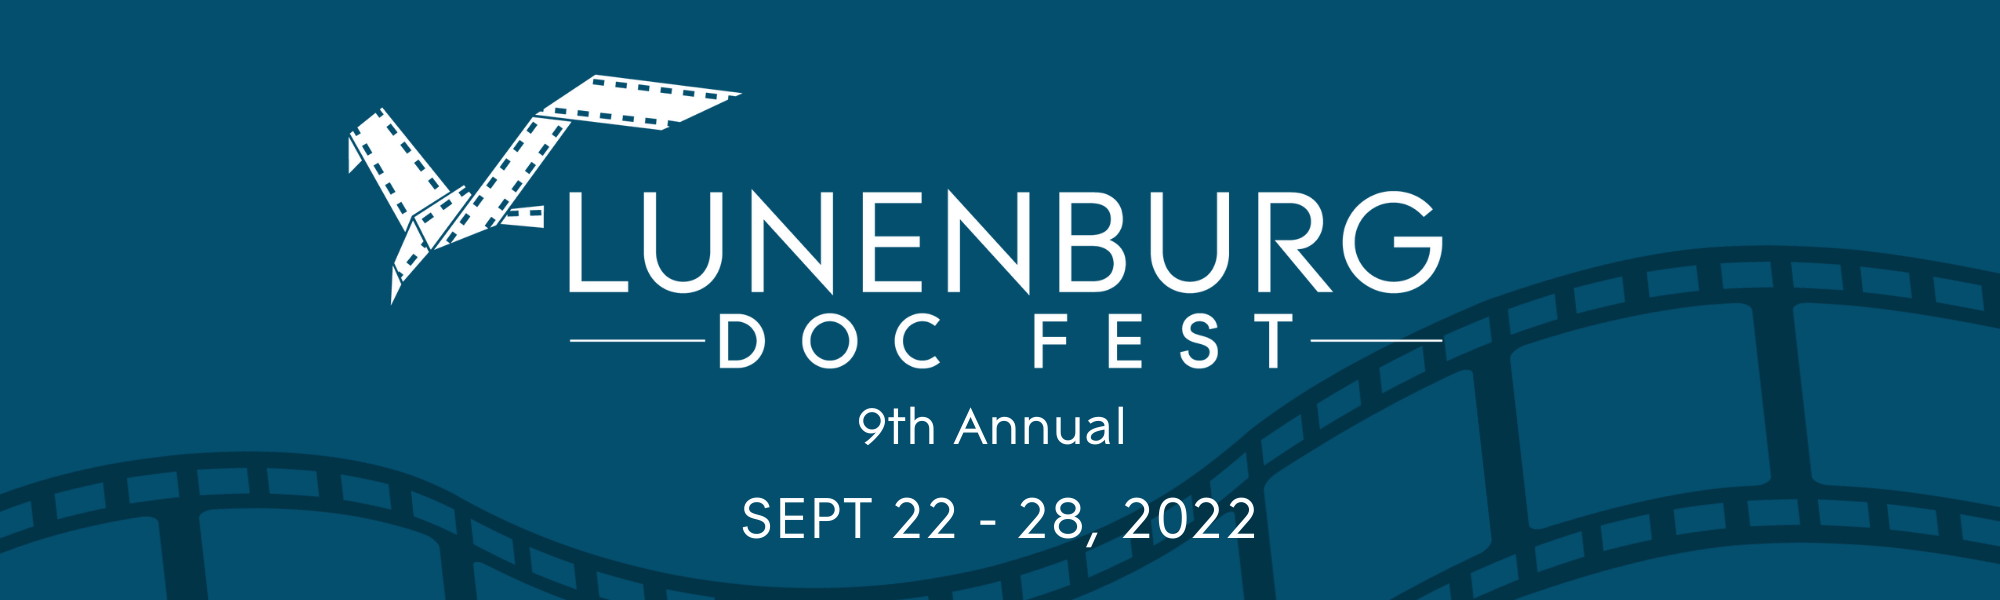 Lunenburg Doc Fest 2022